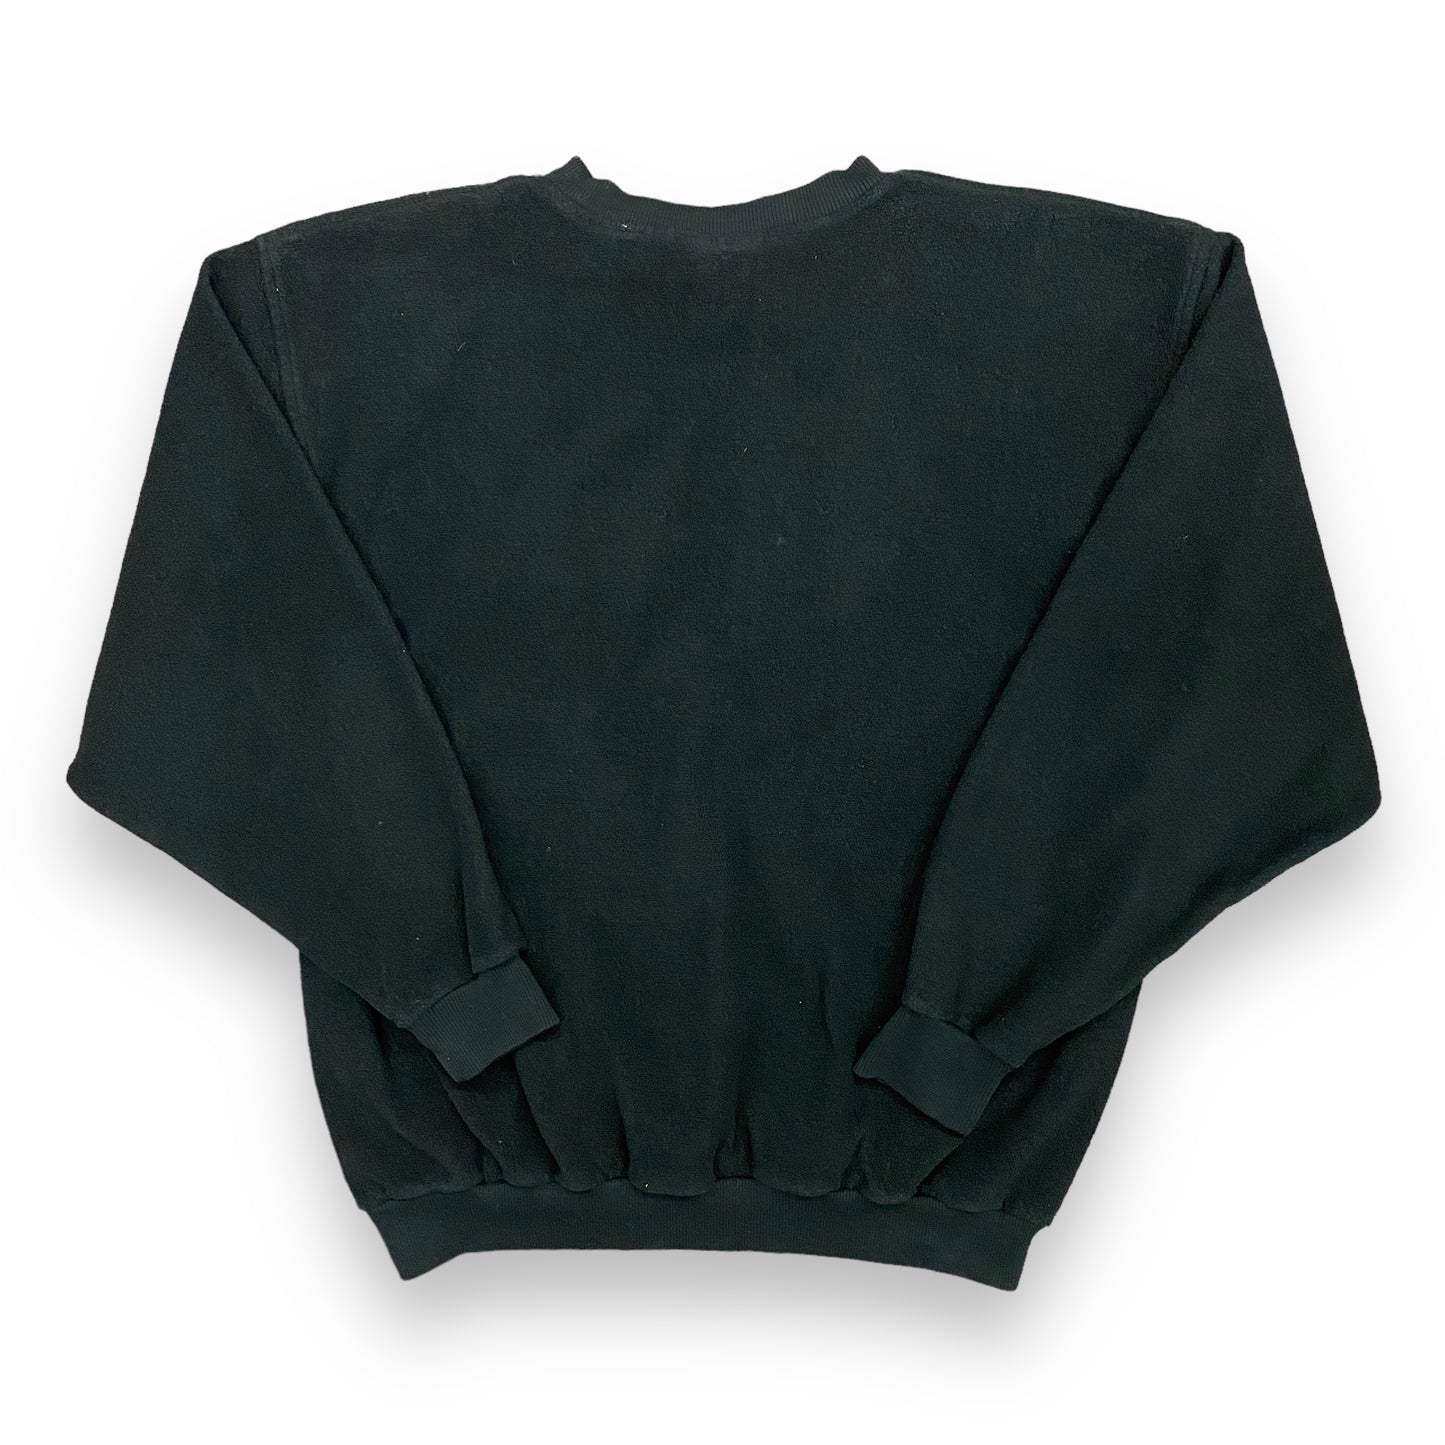 Vintage 90s Adidas Embroidered Logo Fleece Sweatshirt - Size Large